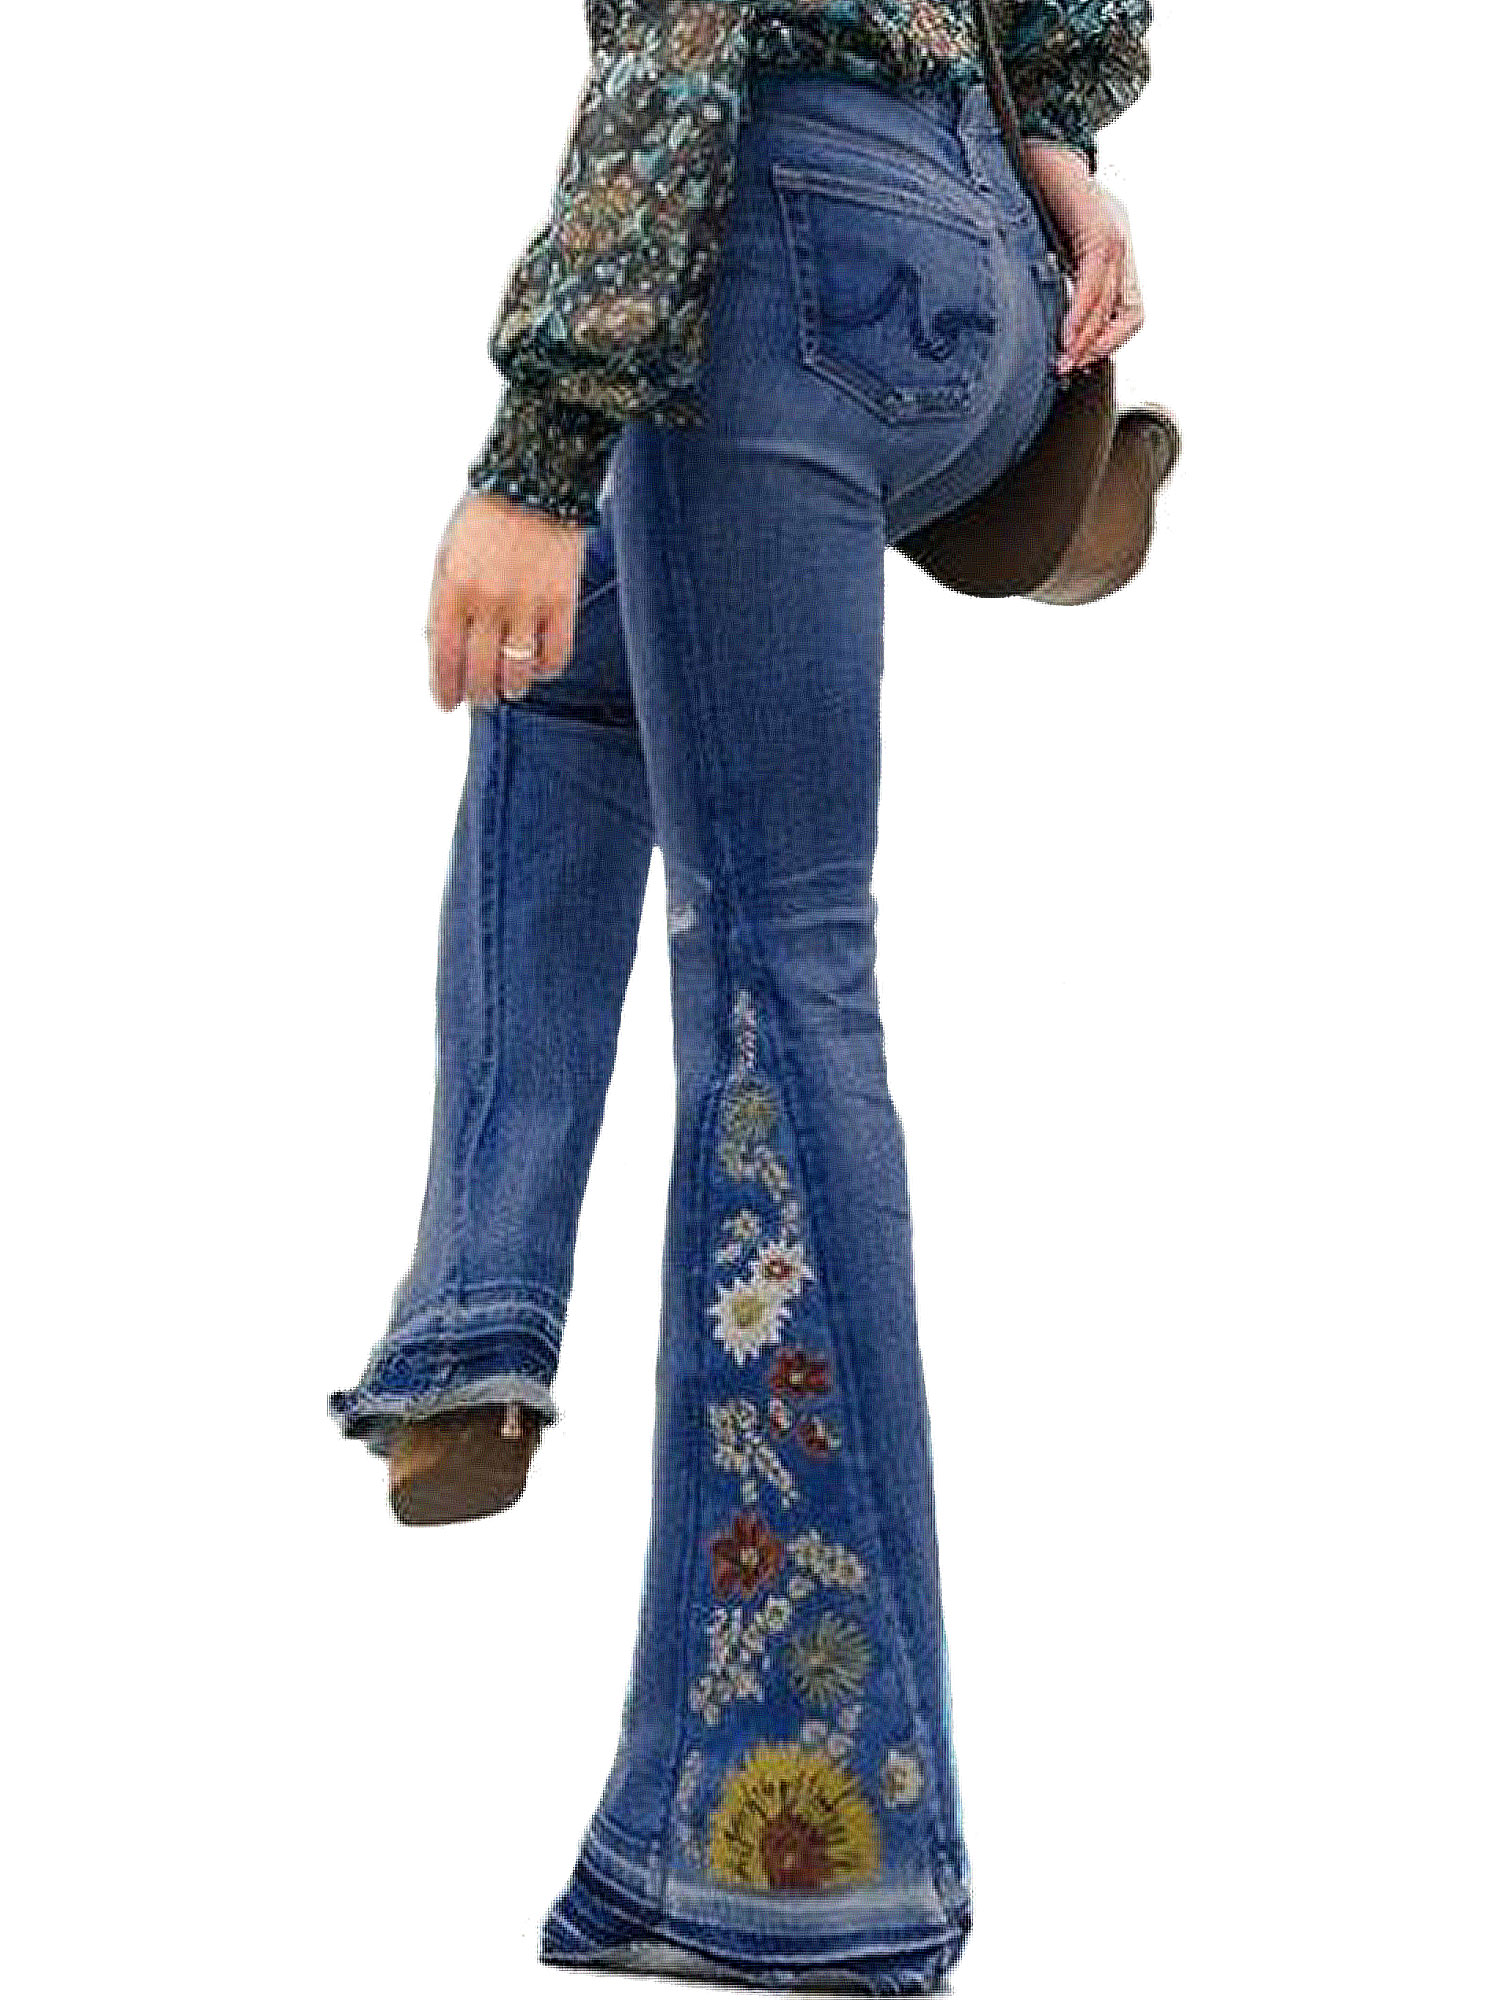 Vintage Plus Size Ladies Denim Jean Women Juniors 78s Trendy Slim Fit High Waist Flared Bell Bottom Denim Jeans Pants Ladies Floral Embroidery Wide Leg Denim Pants - image 1 of 2